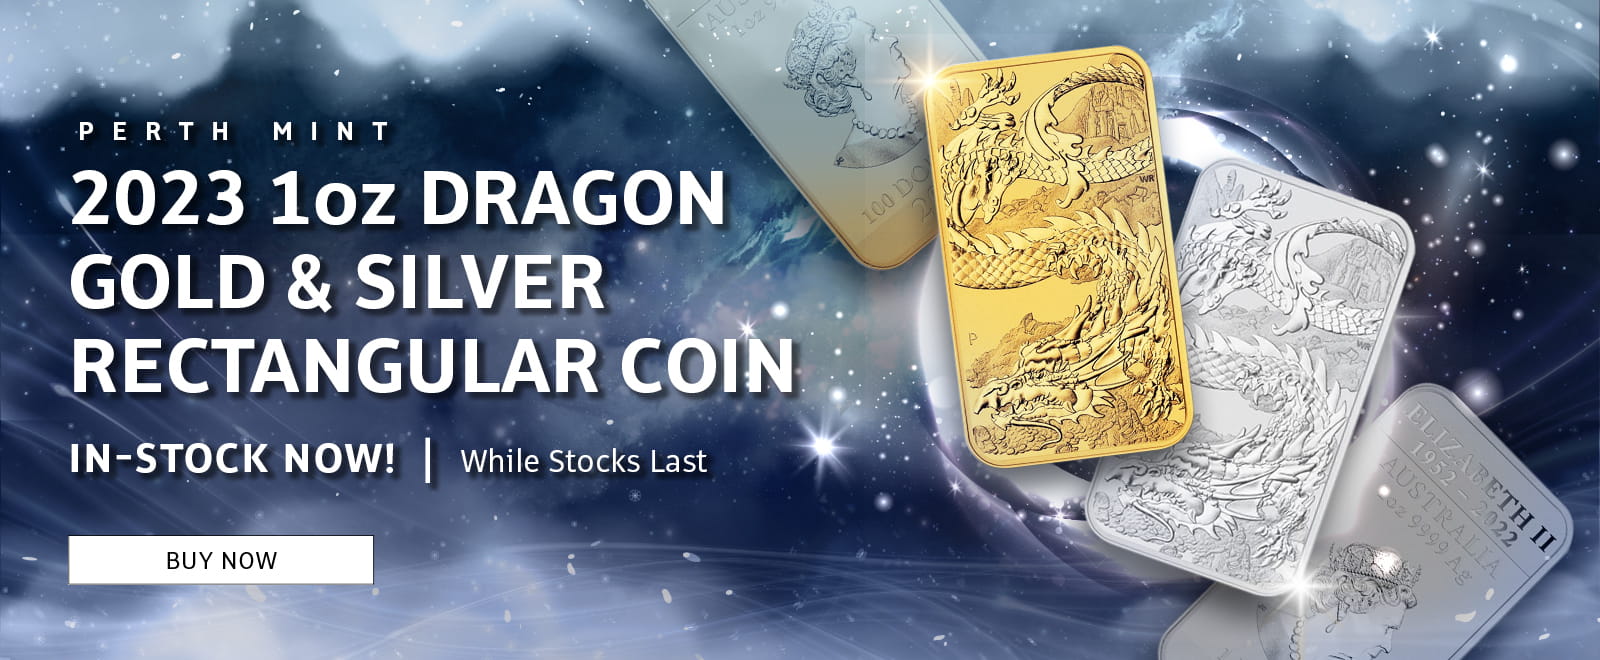 Perth Mint 2023 1 oz Dragon Gold & Silver Rectangular Coin